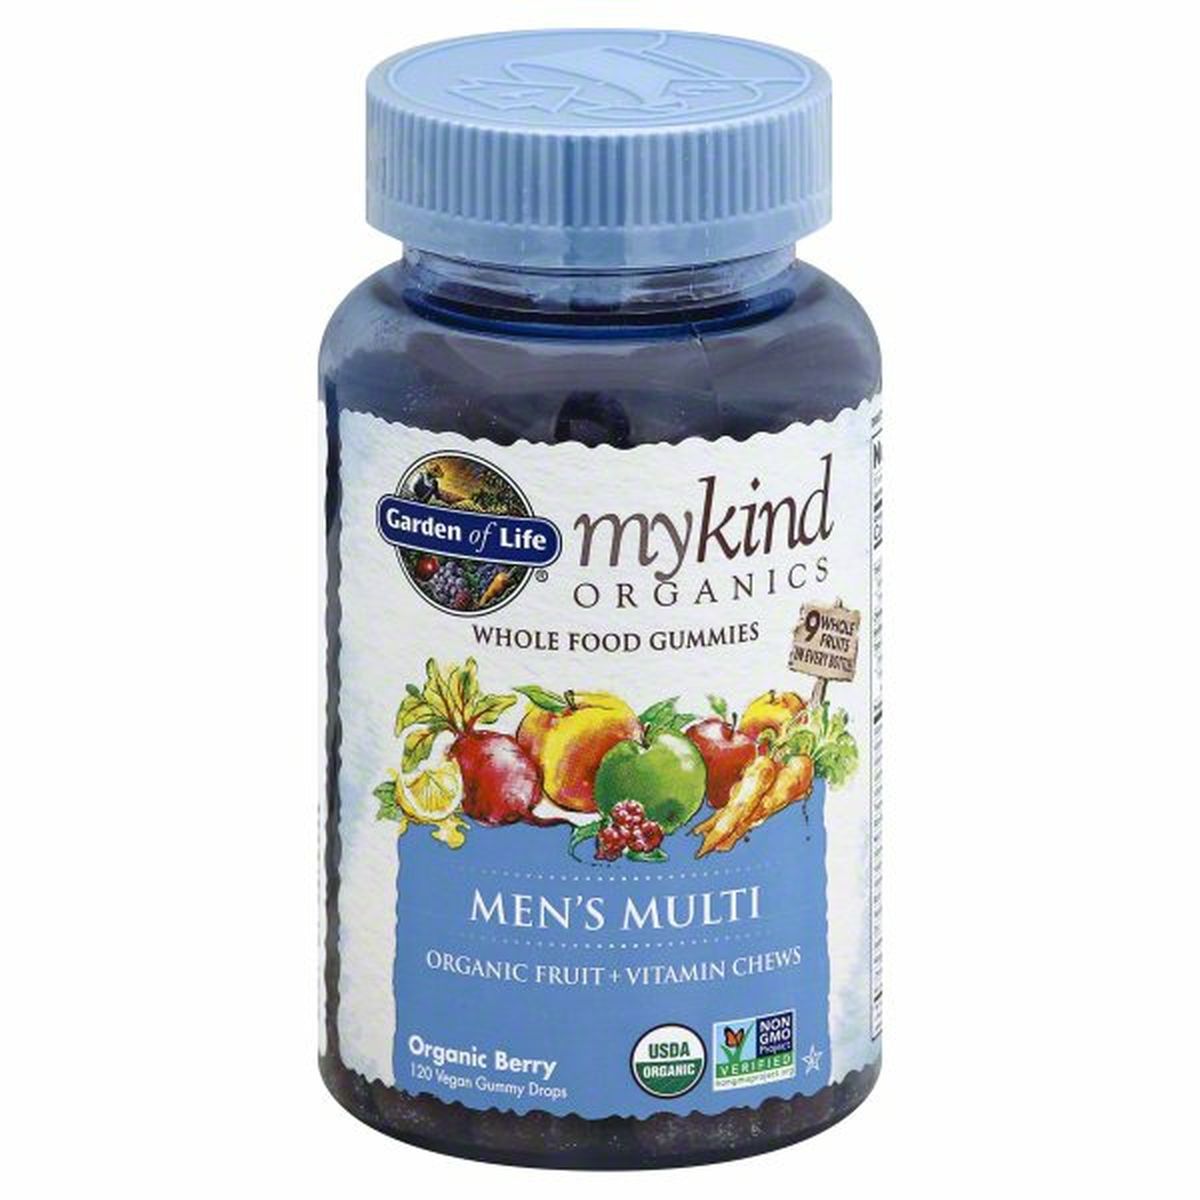 Calories in Garden of Life MyKind Organics Men's Multi, Whole Food, Vegan Gummy Drops, Organic Berry